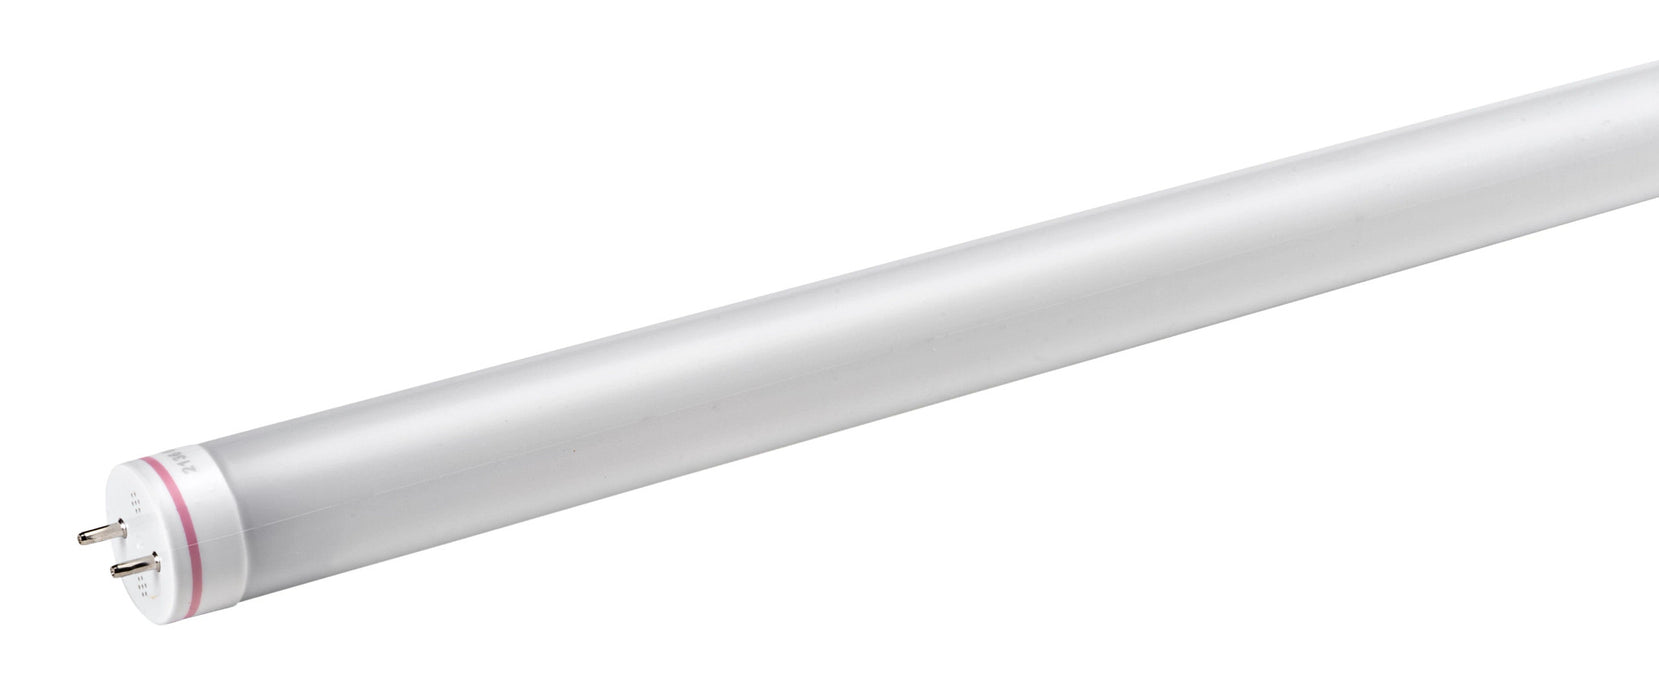 Keystone 9.5W LED T8 Tube Glass Ballast Compatible 4 Foot 4000K Smartdrive (KT-LED9.5T8-48G-840-S /G3)